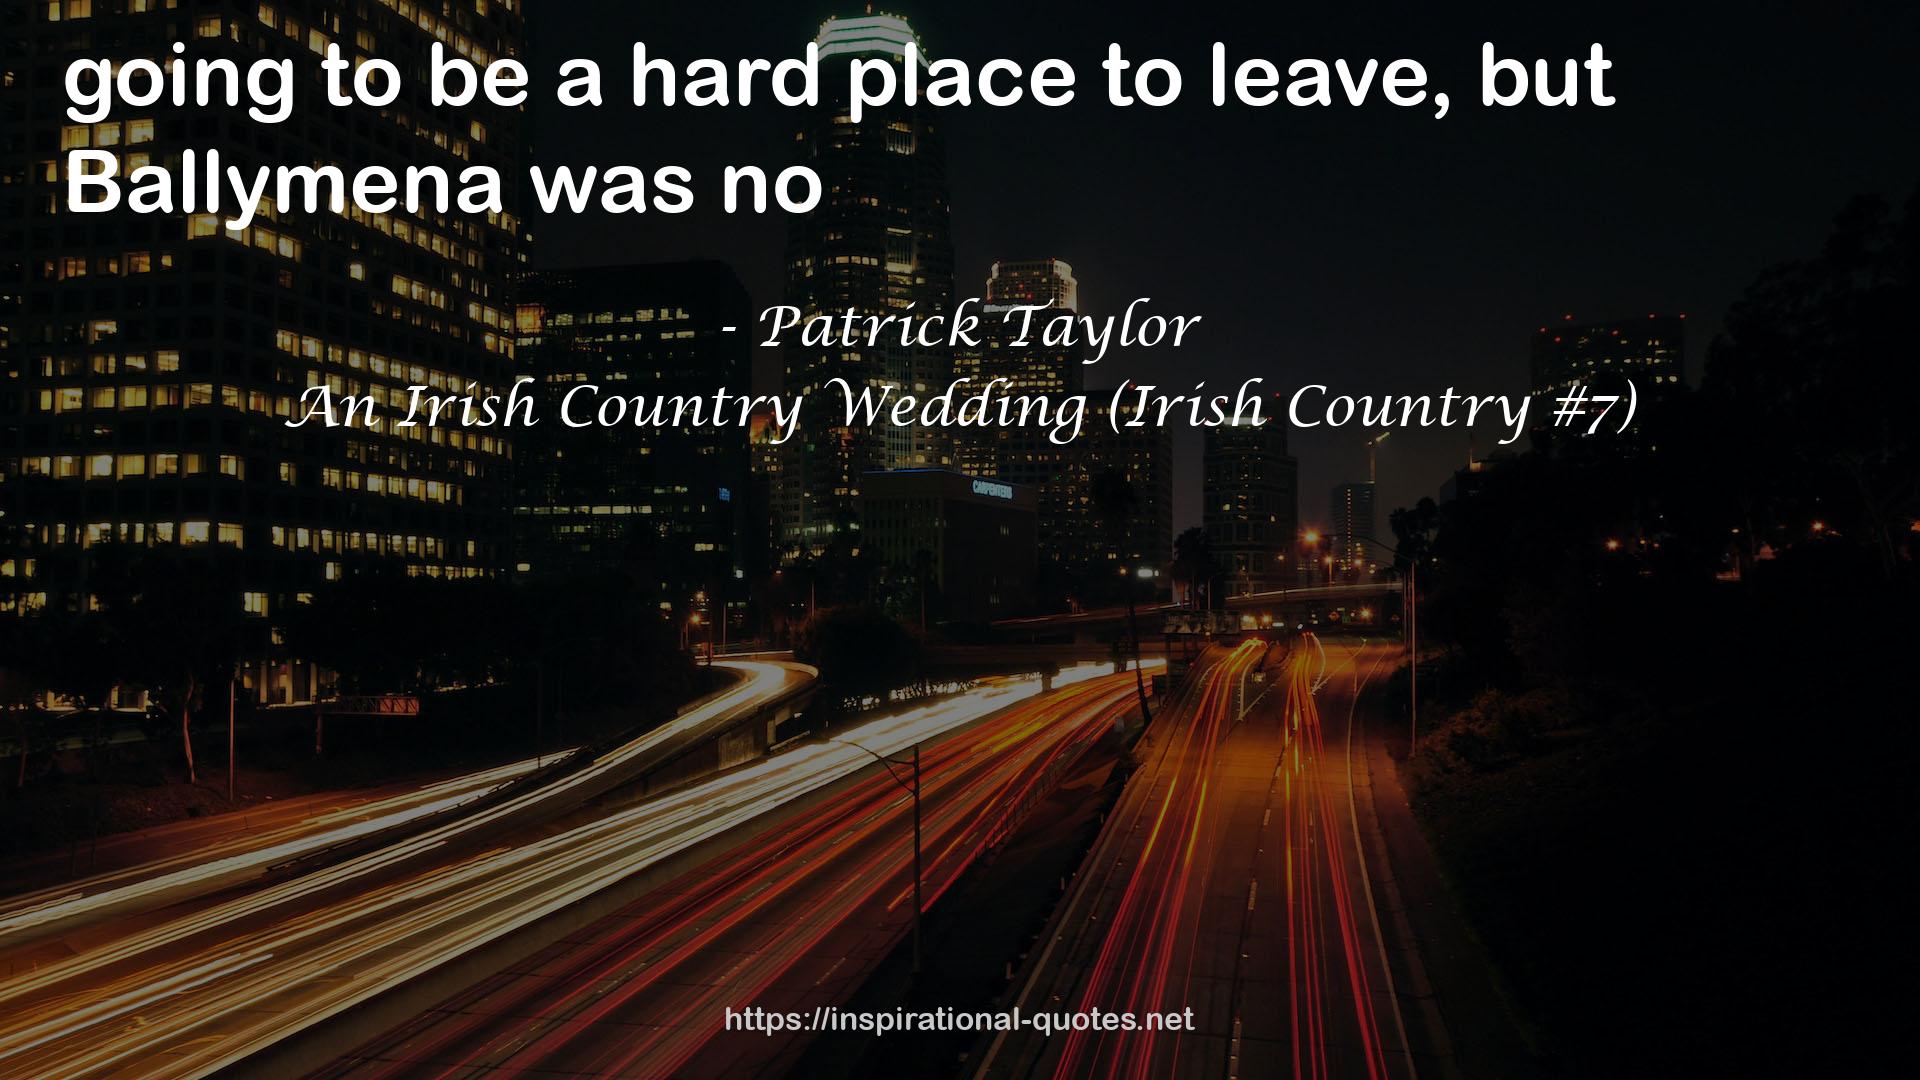 An Irish Country Wedding (Irish Country #7) QUOTES